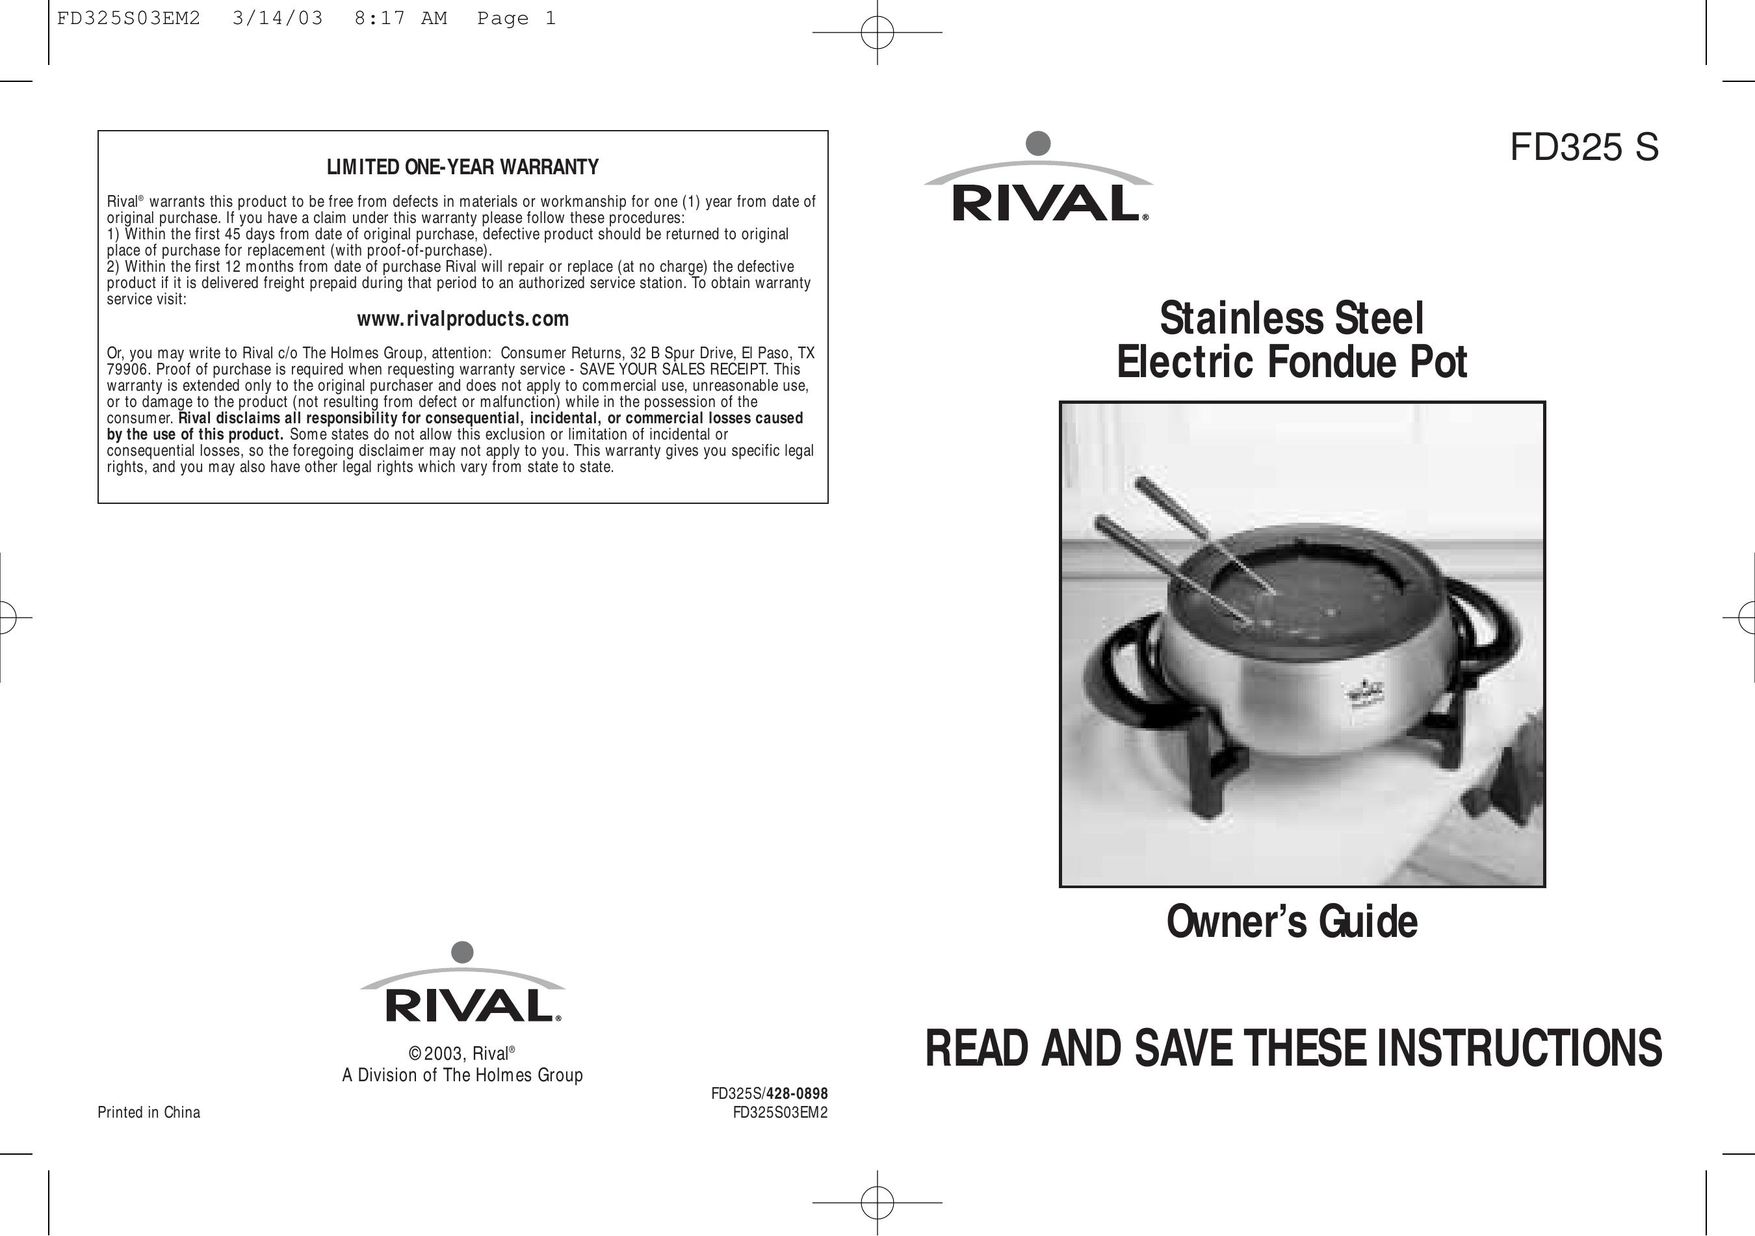 Rival FD325 S Fondue Maker User Manual